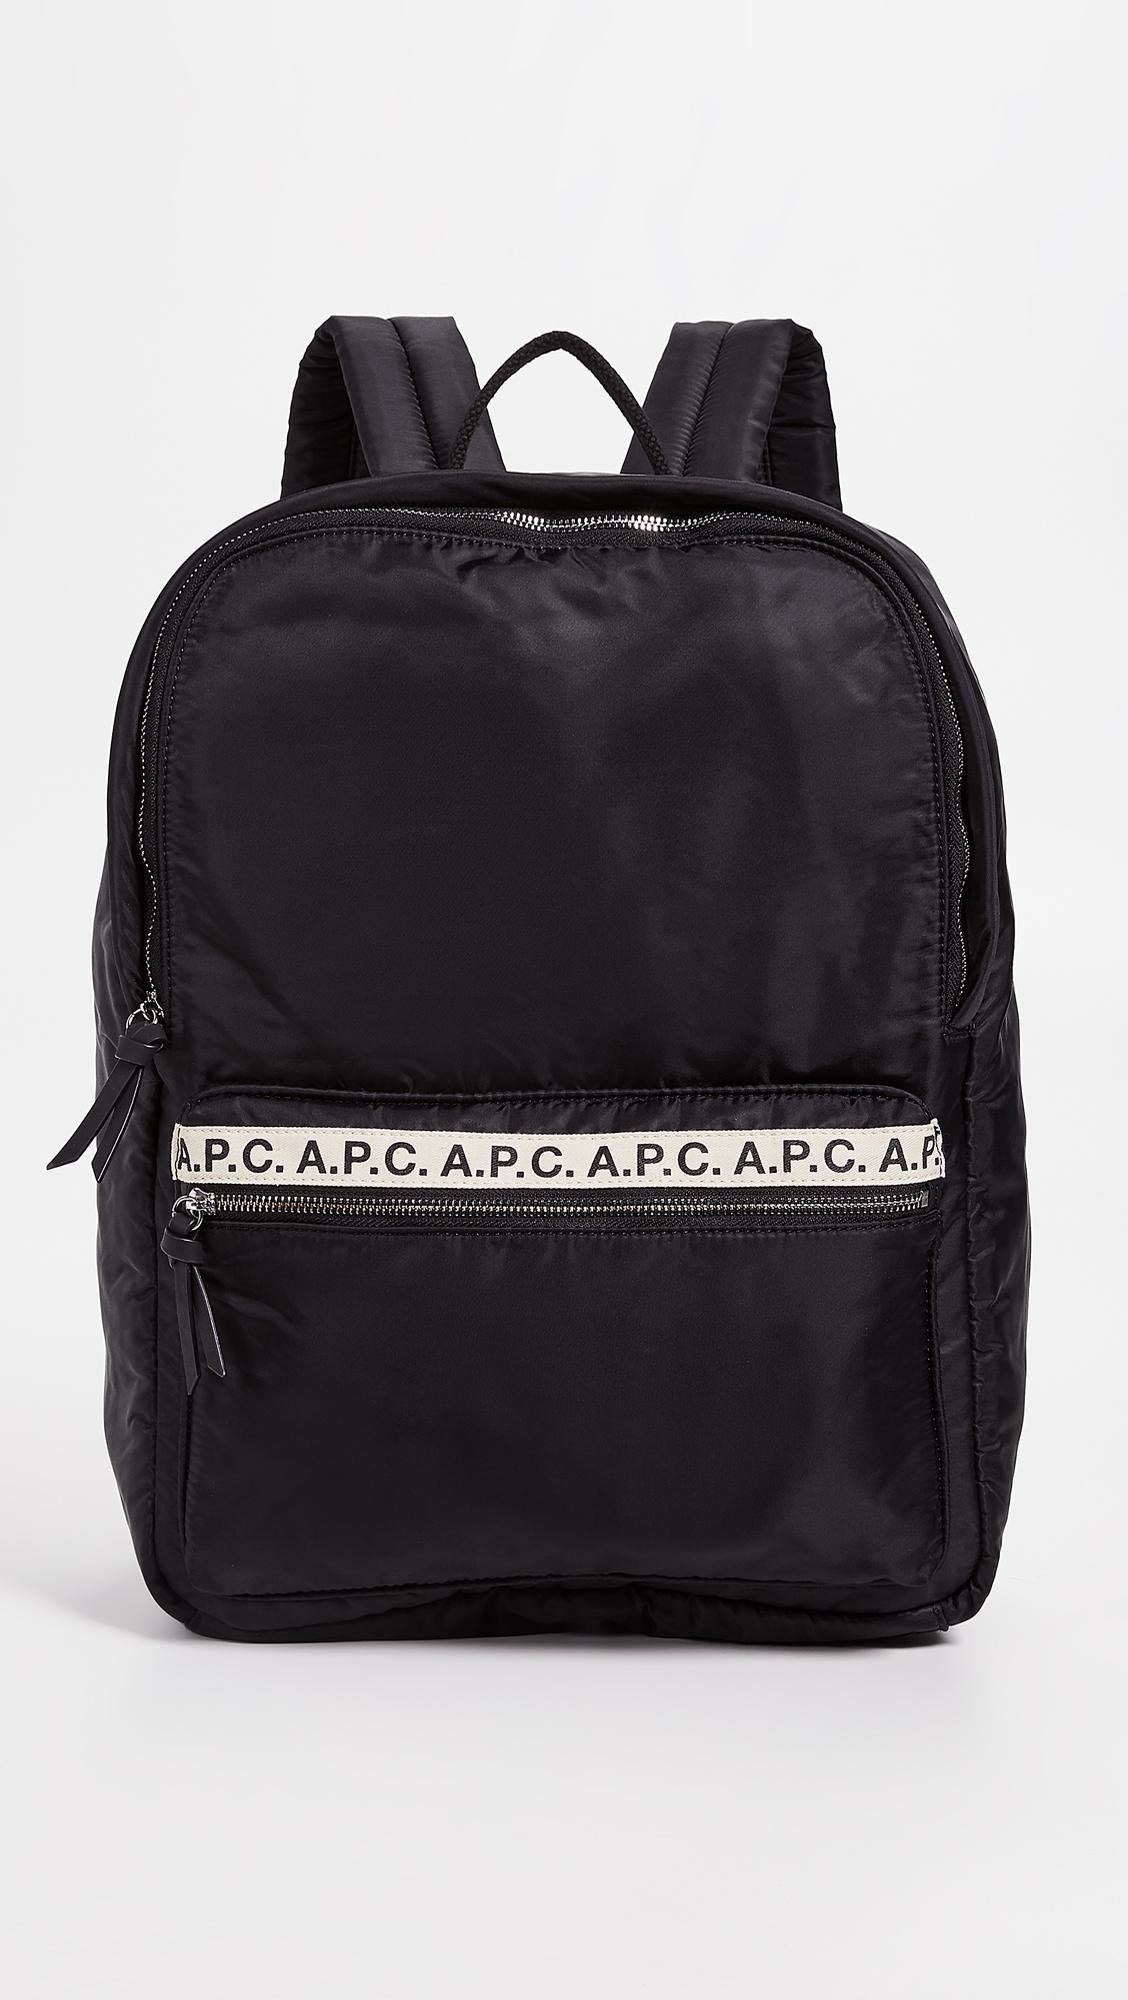 A.P.C. Sally Tape Logo Backpack in Black for Men - Lyst